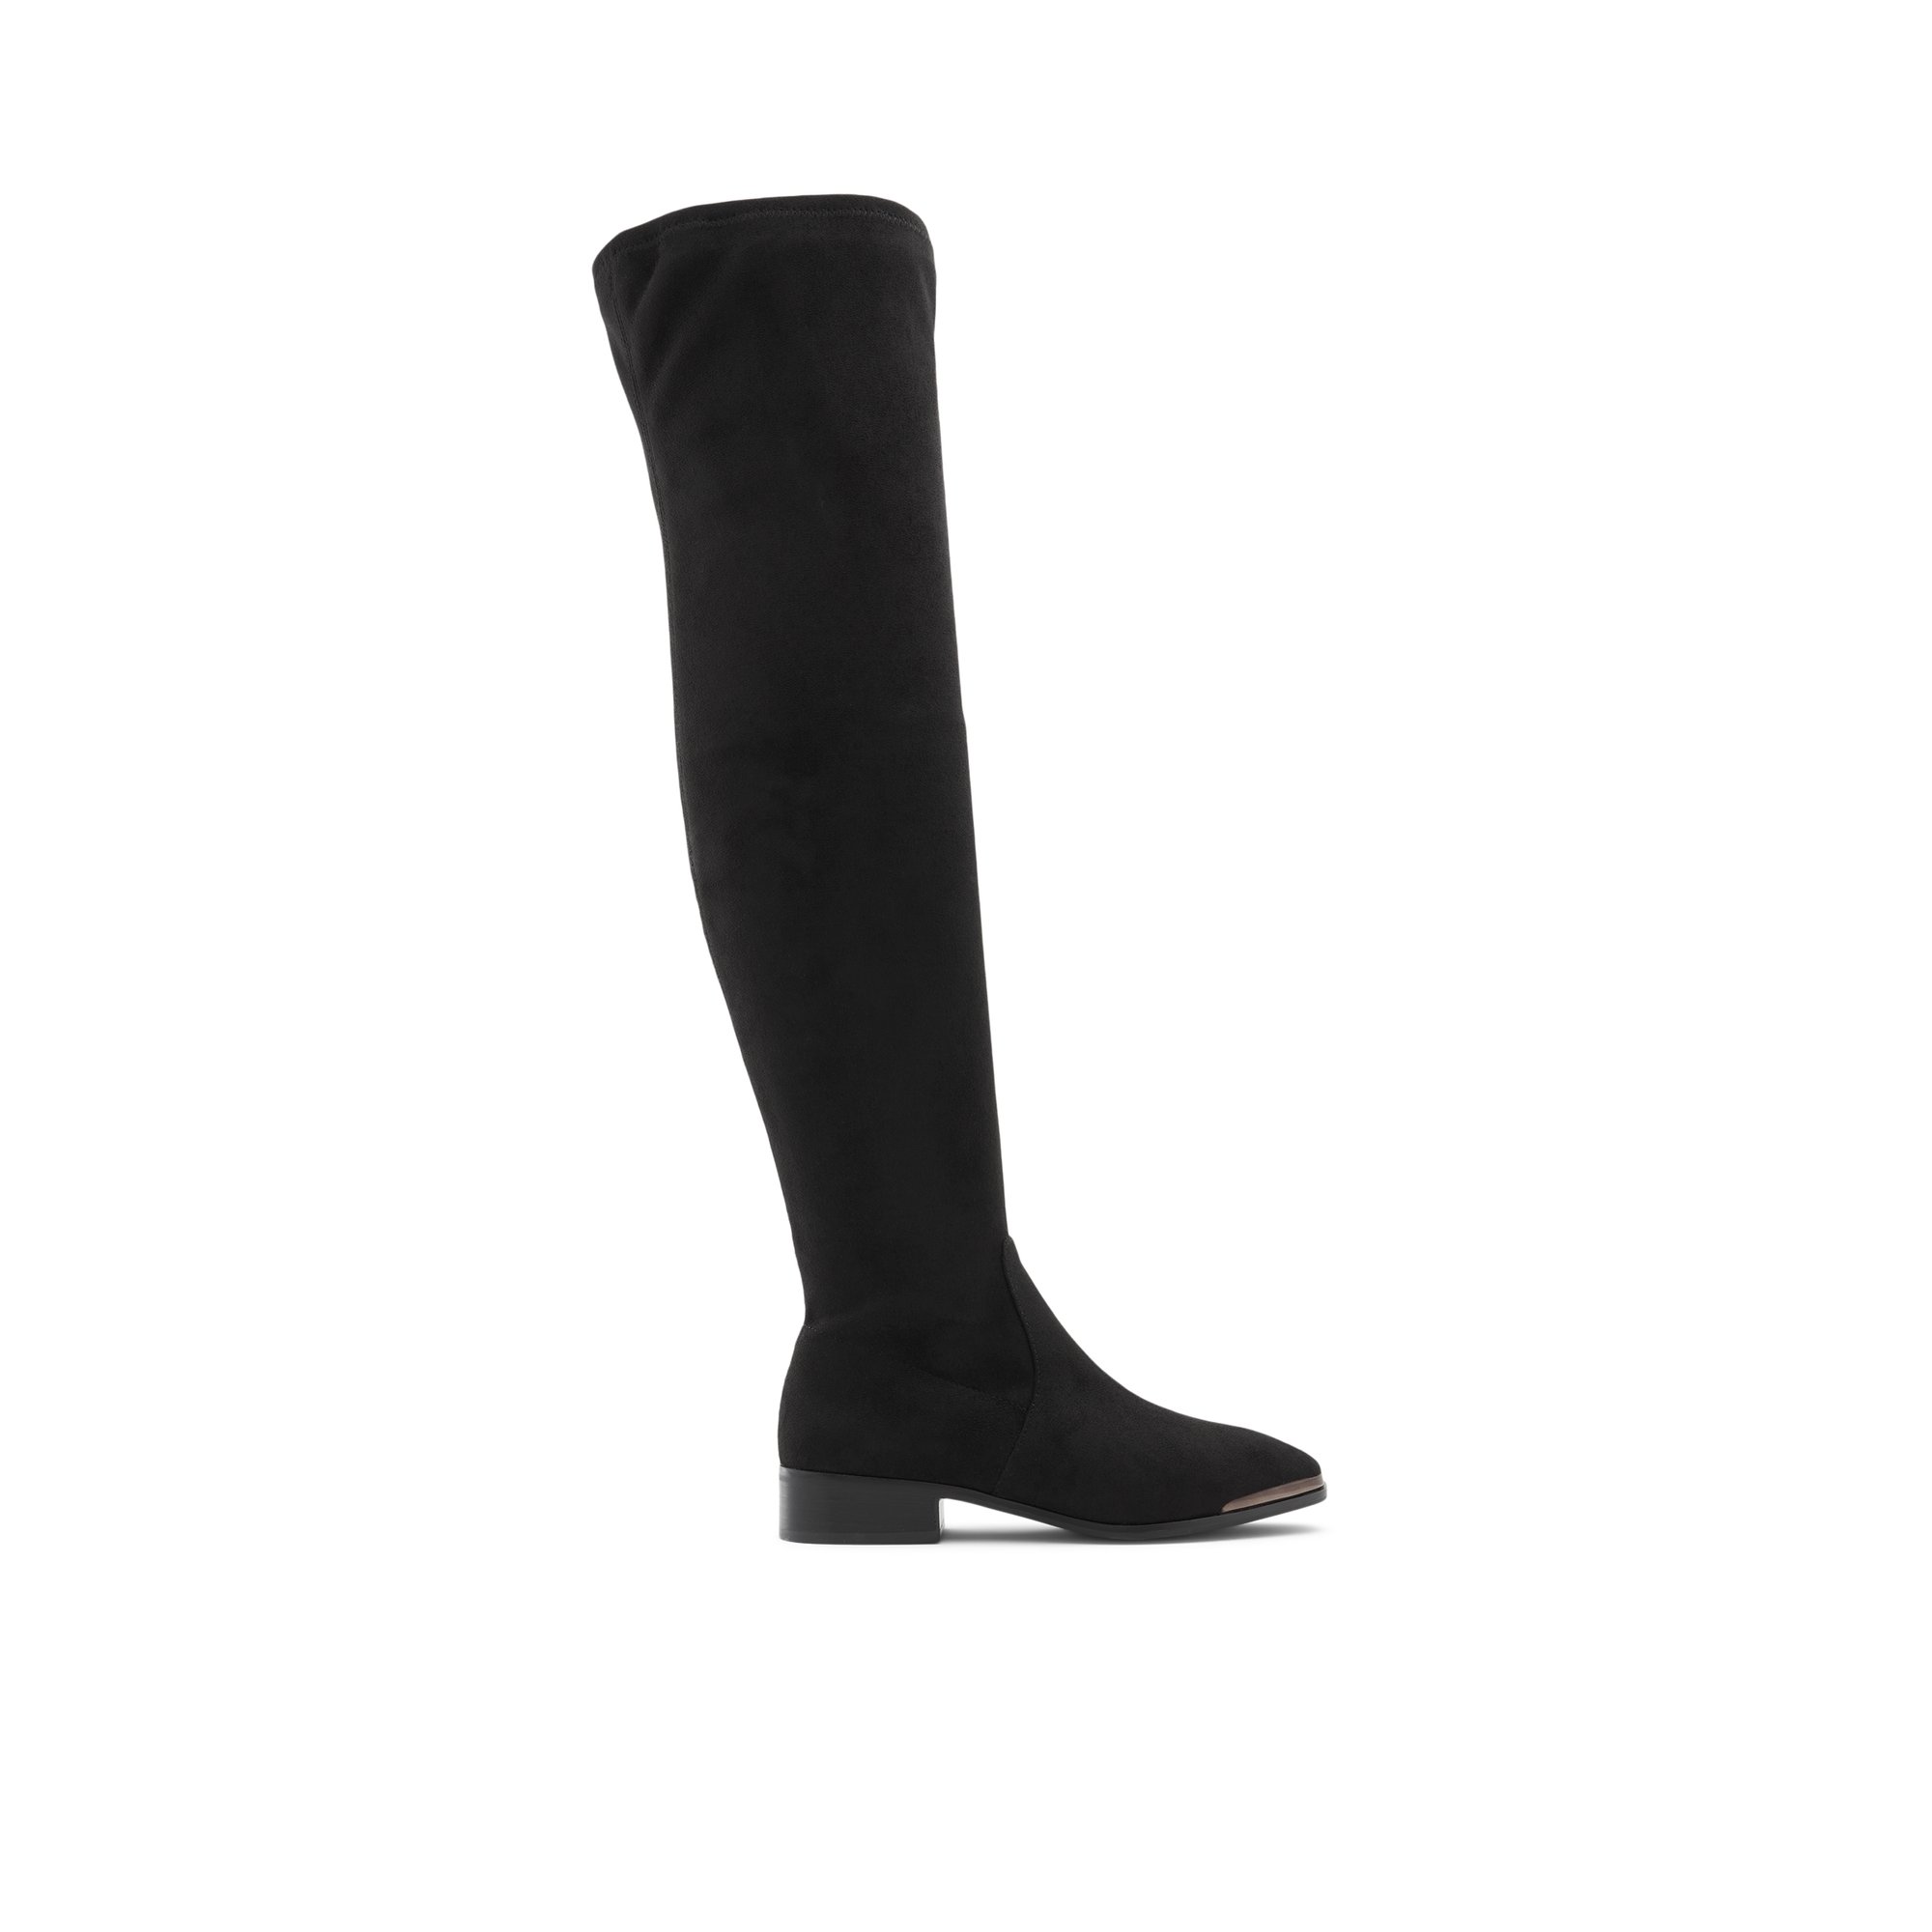 ALDO Sevaunna - Women's Boots Casual - Black